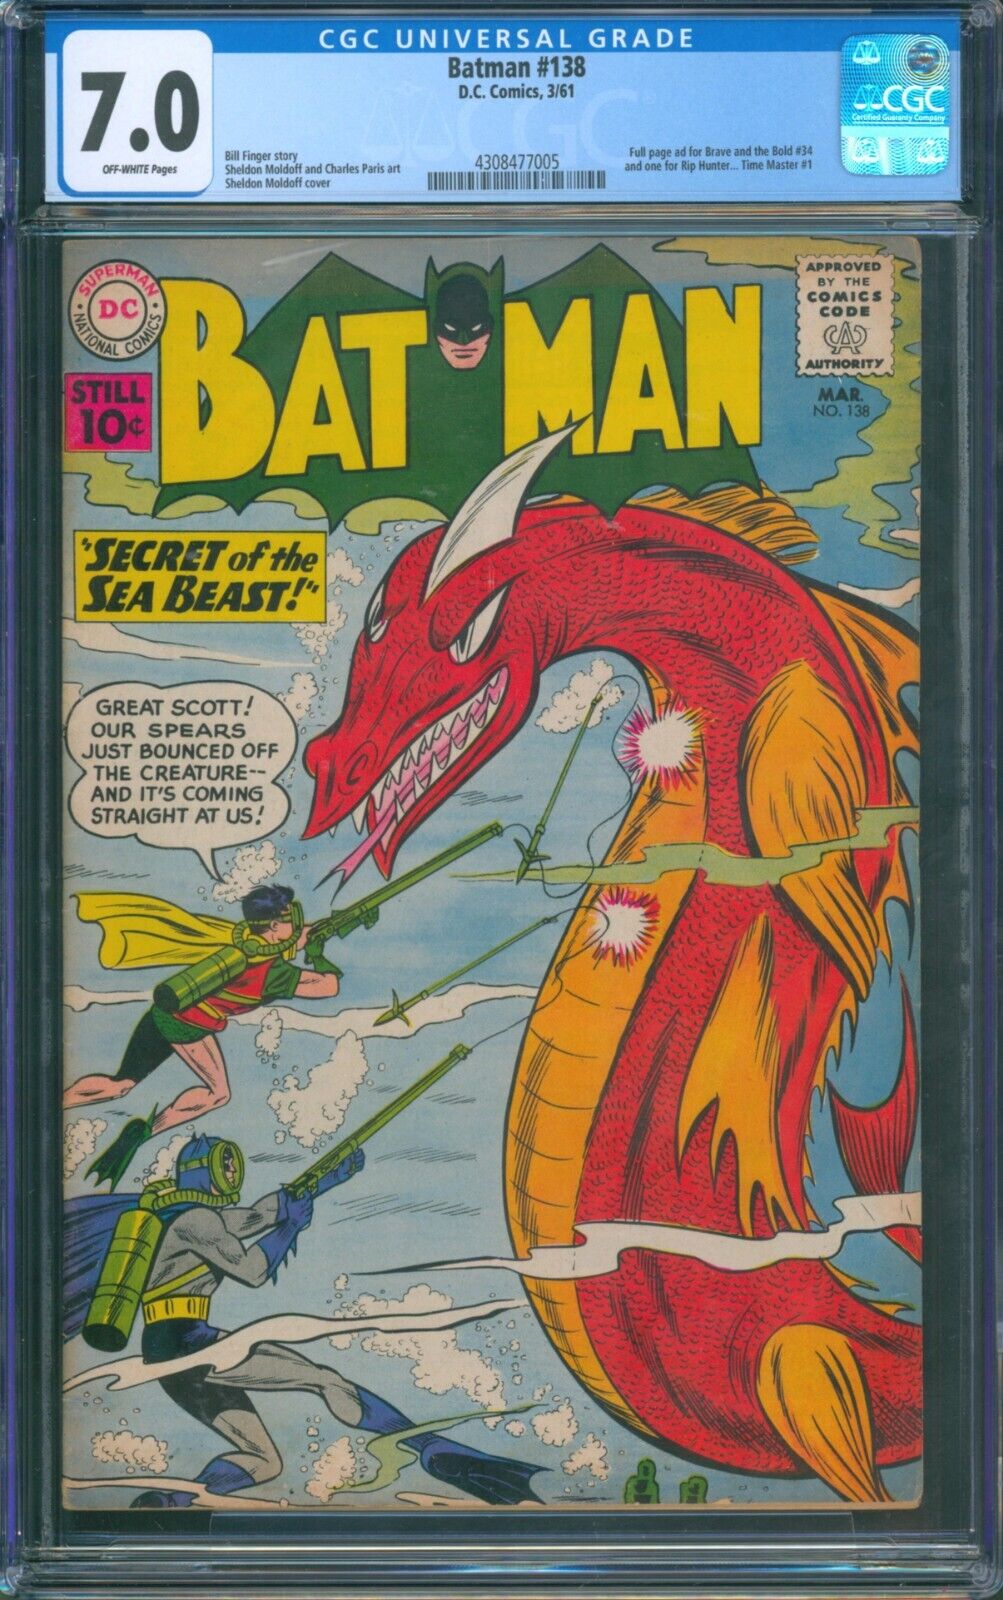 Batman #138 🌟 CGC 7.0 🌟 Classic Sea Beast Cover Silver Age DC Comic 1961